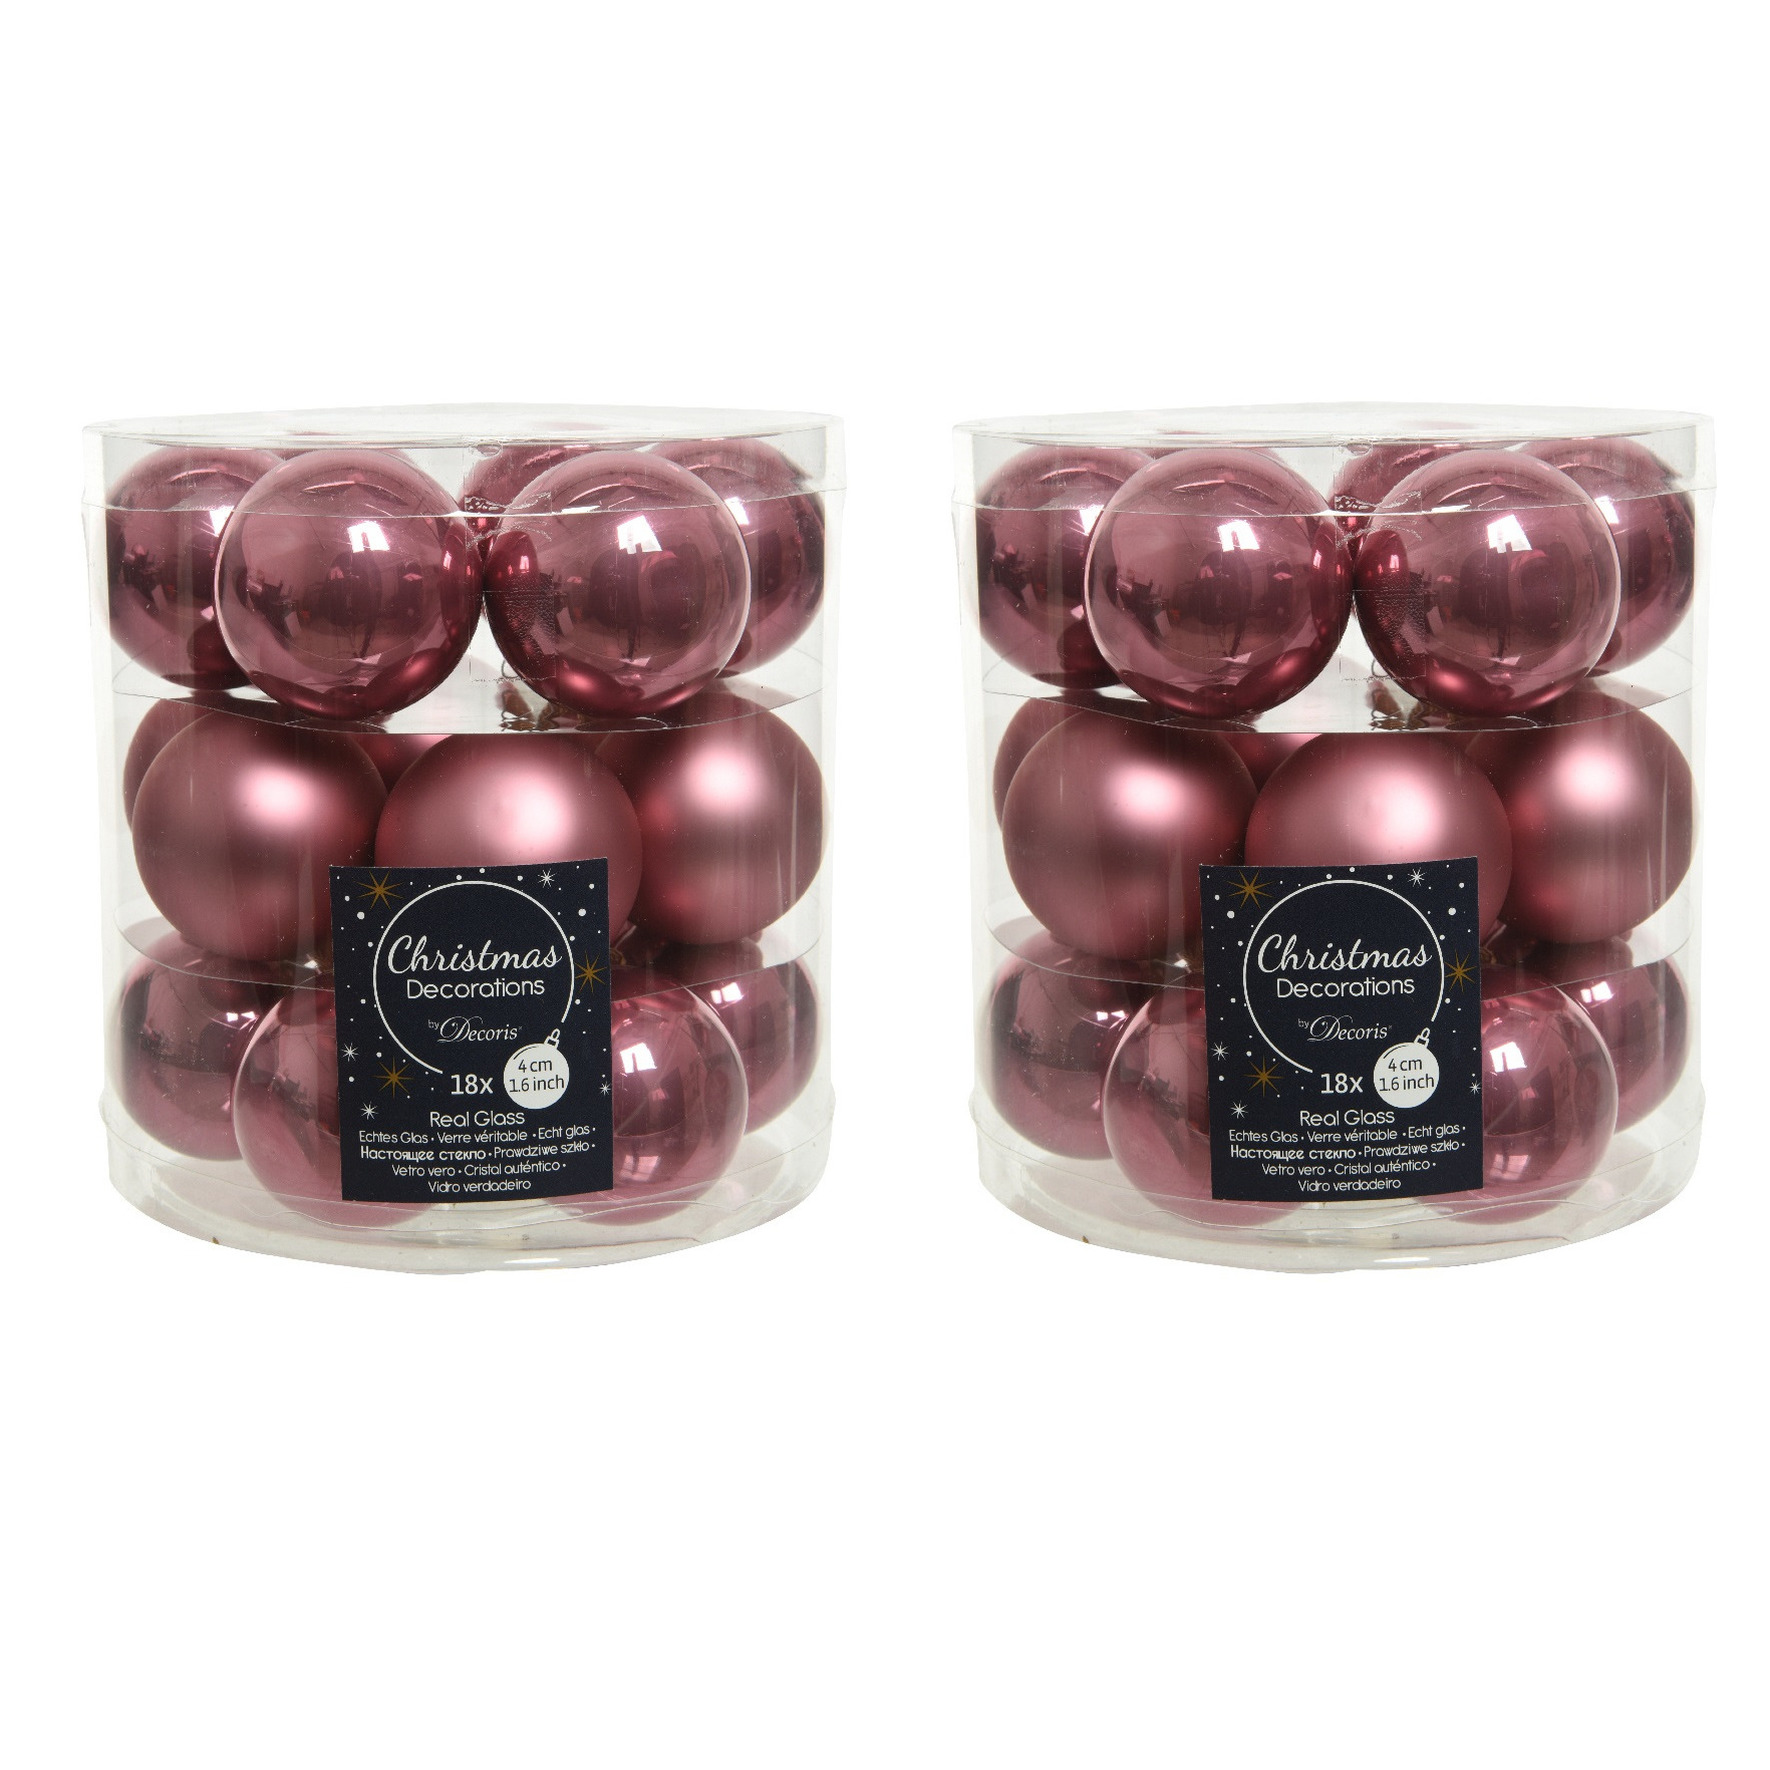 54x stuks kleine glazen kerstballen oud roze (velvet) 4 cm mat-glans